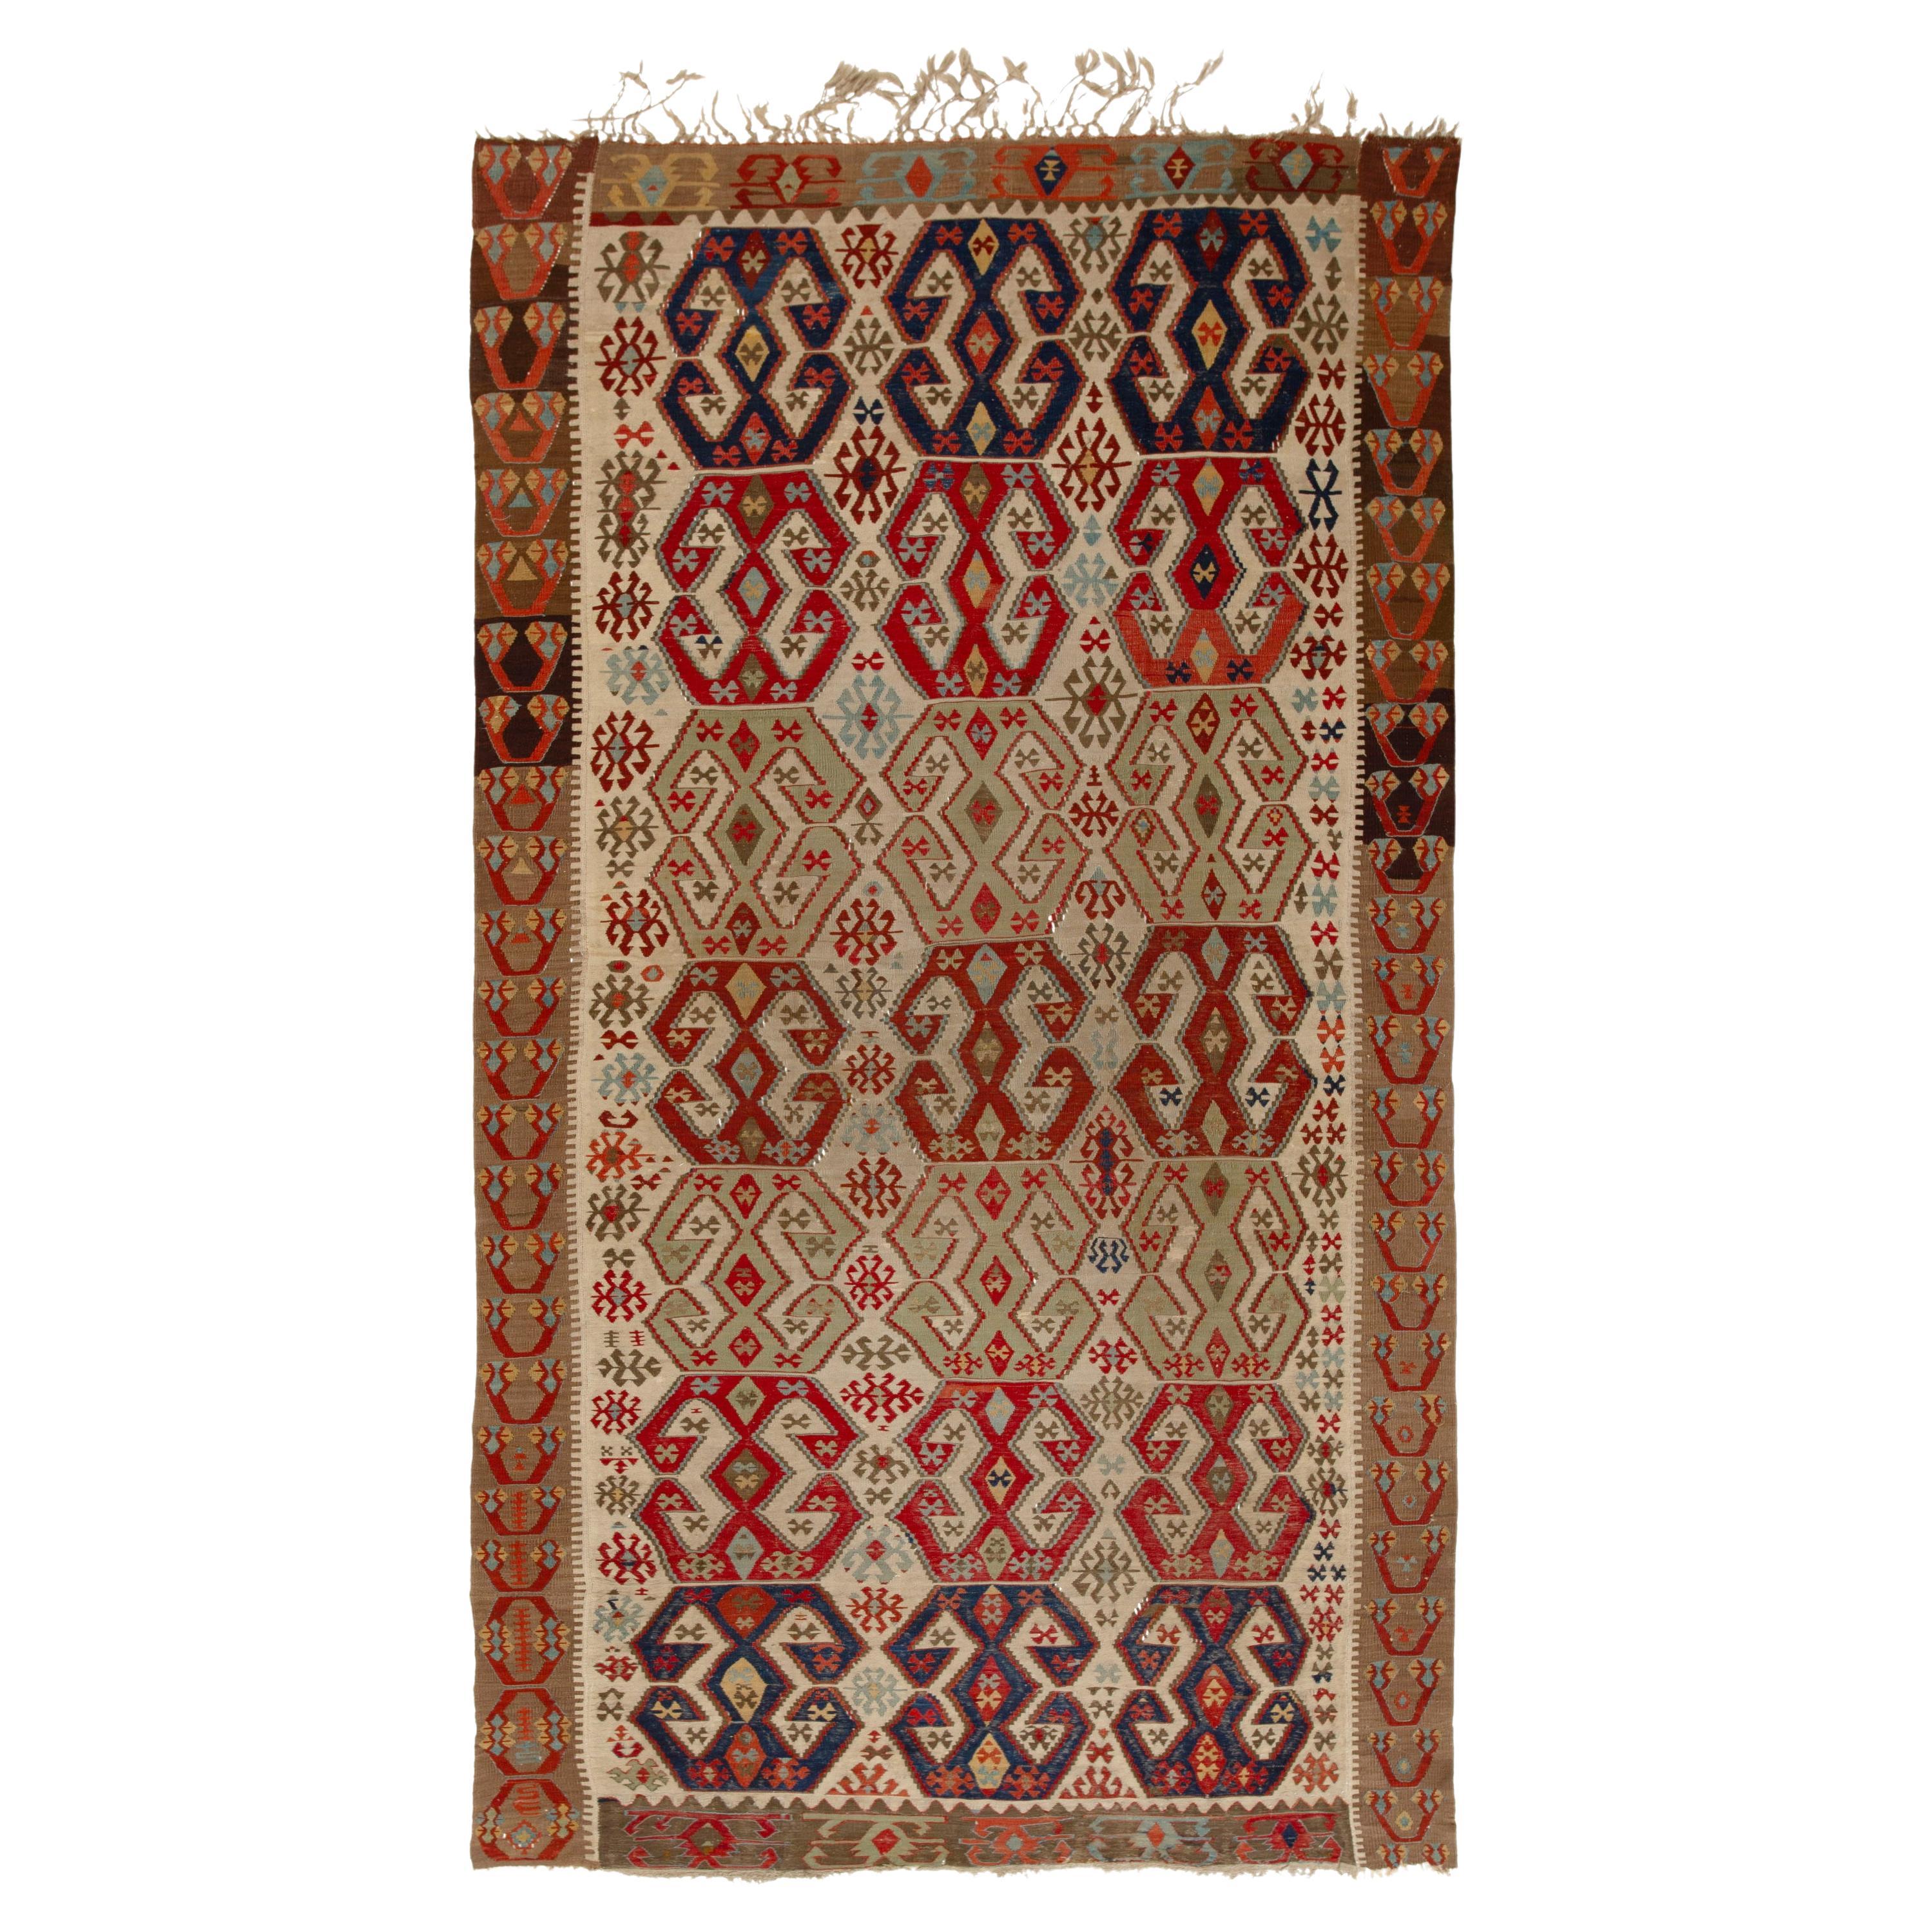 abc carpet Brown Multicolored Vintage Wool Kilim Rug - 6'1" x 13'